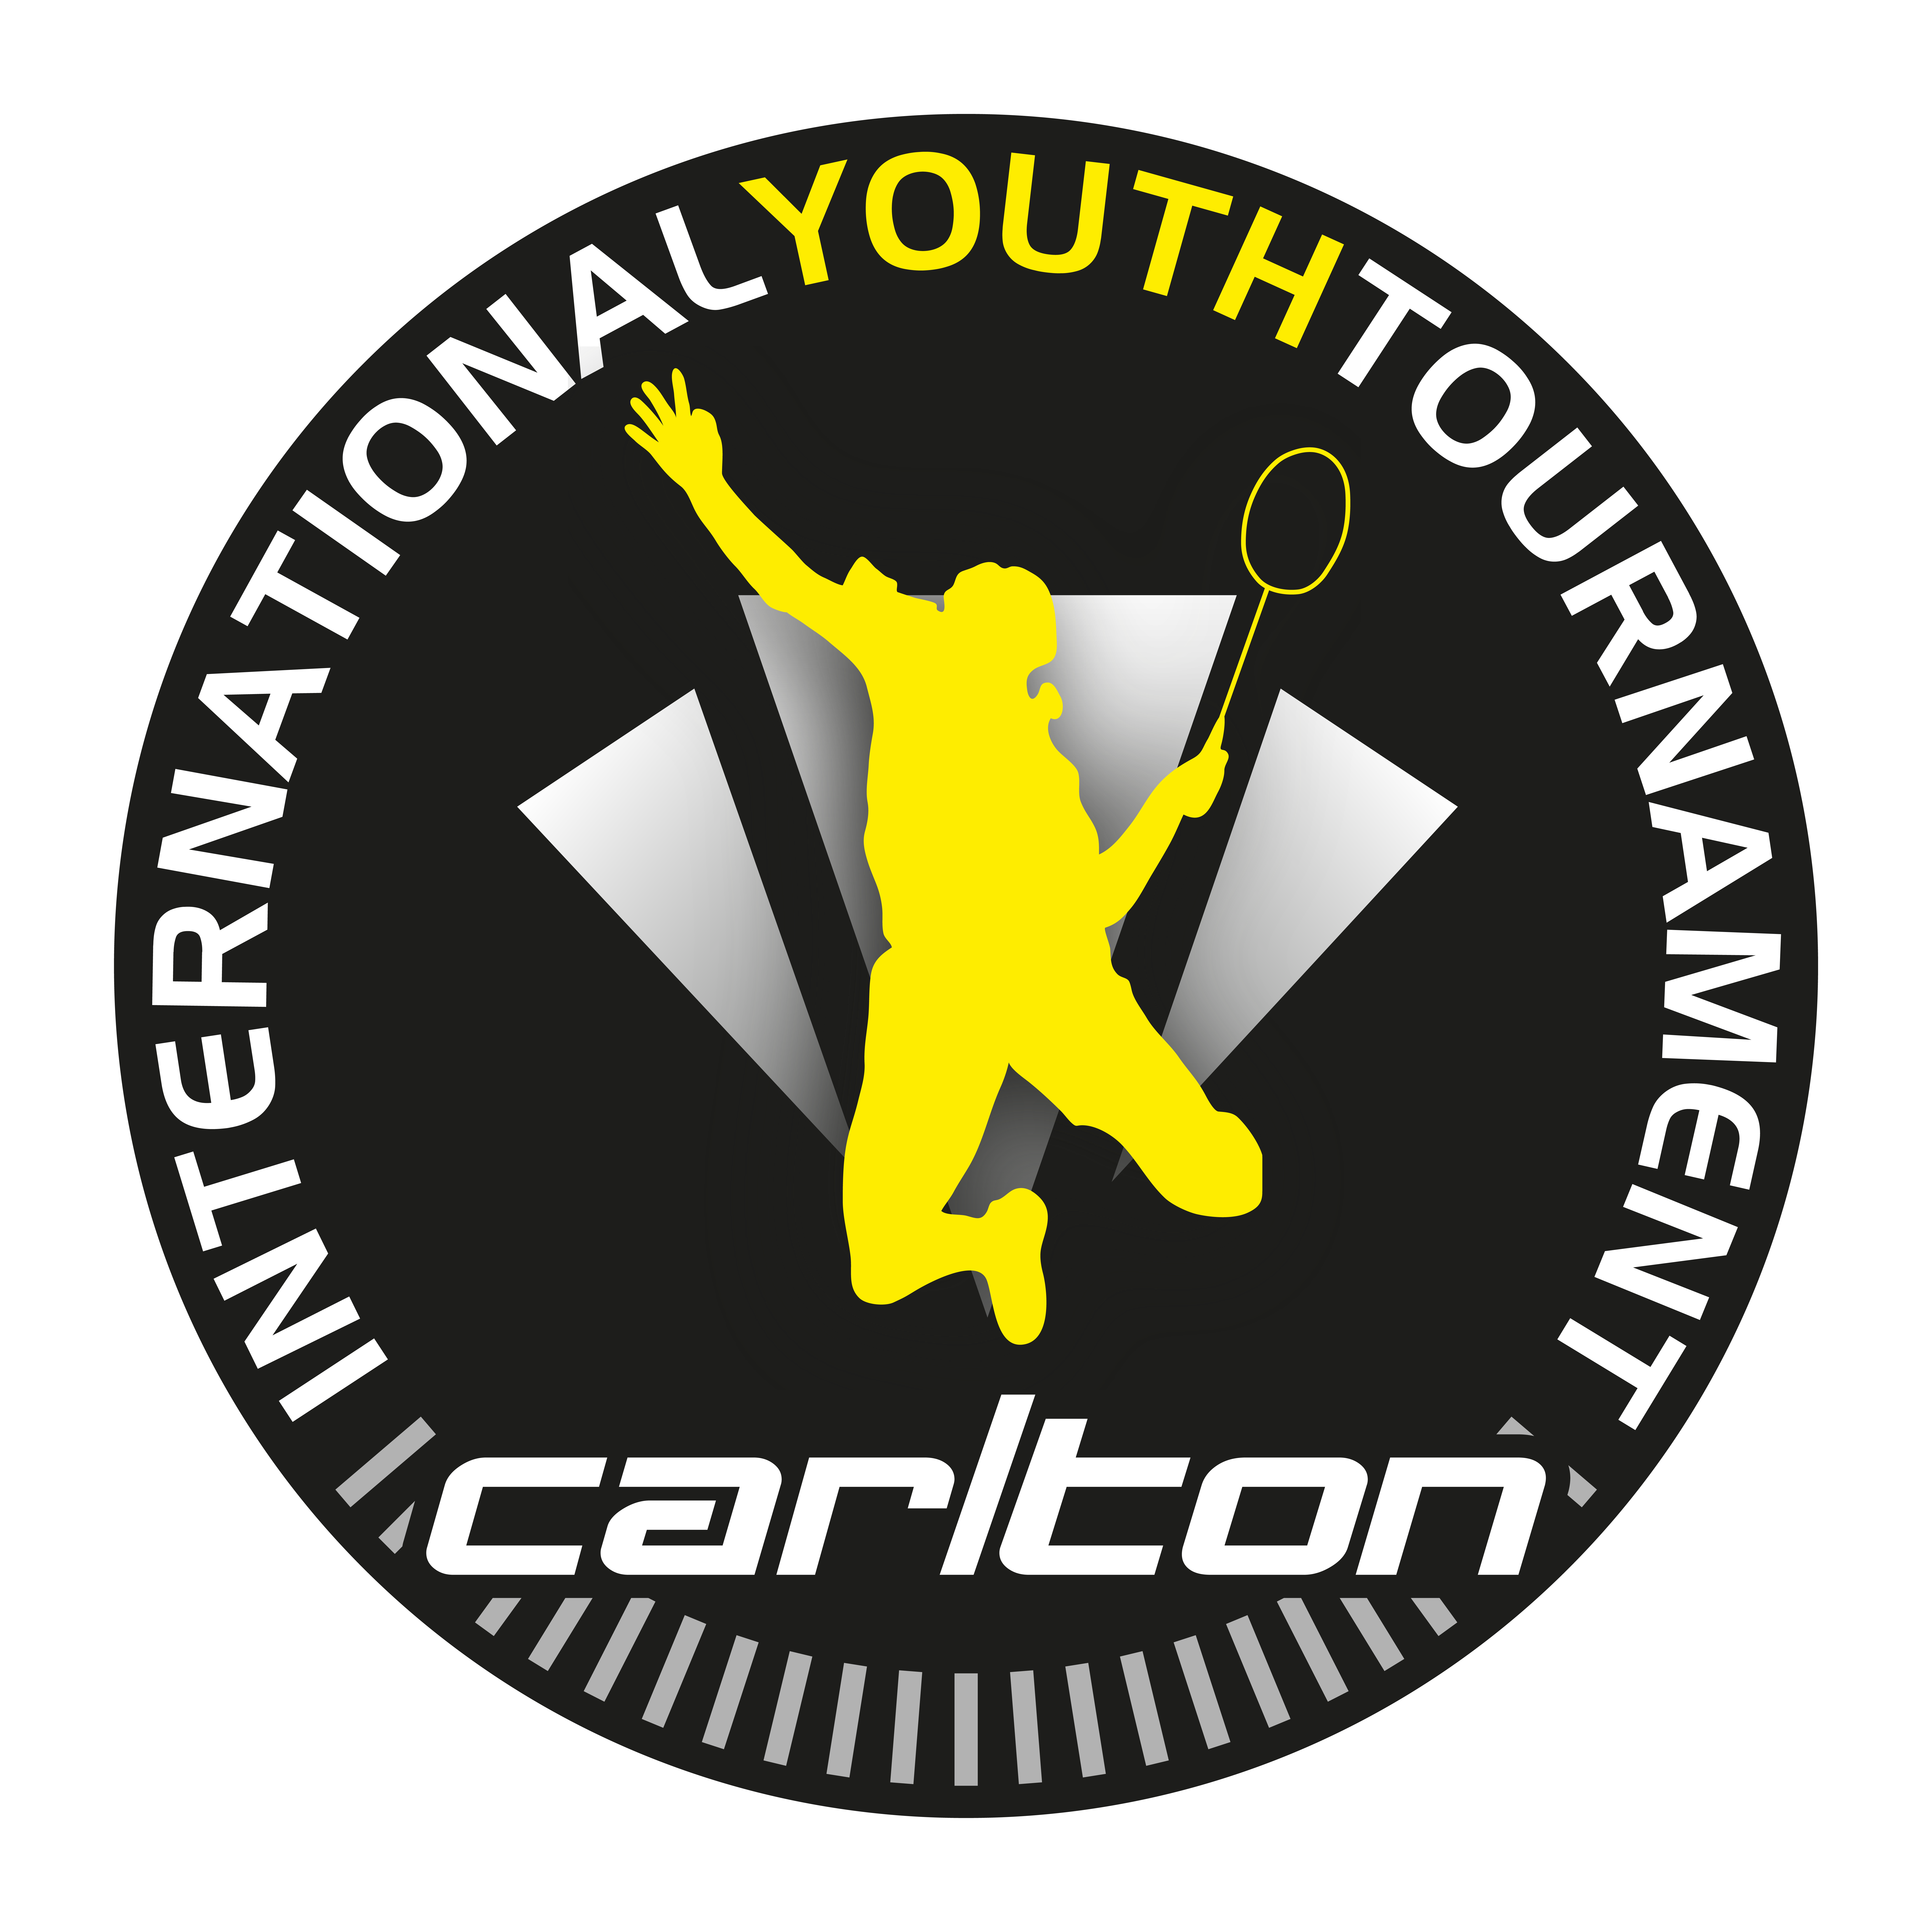 Carlton International Youth Tournament